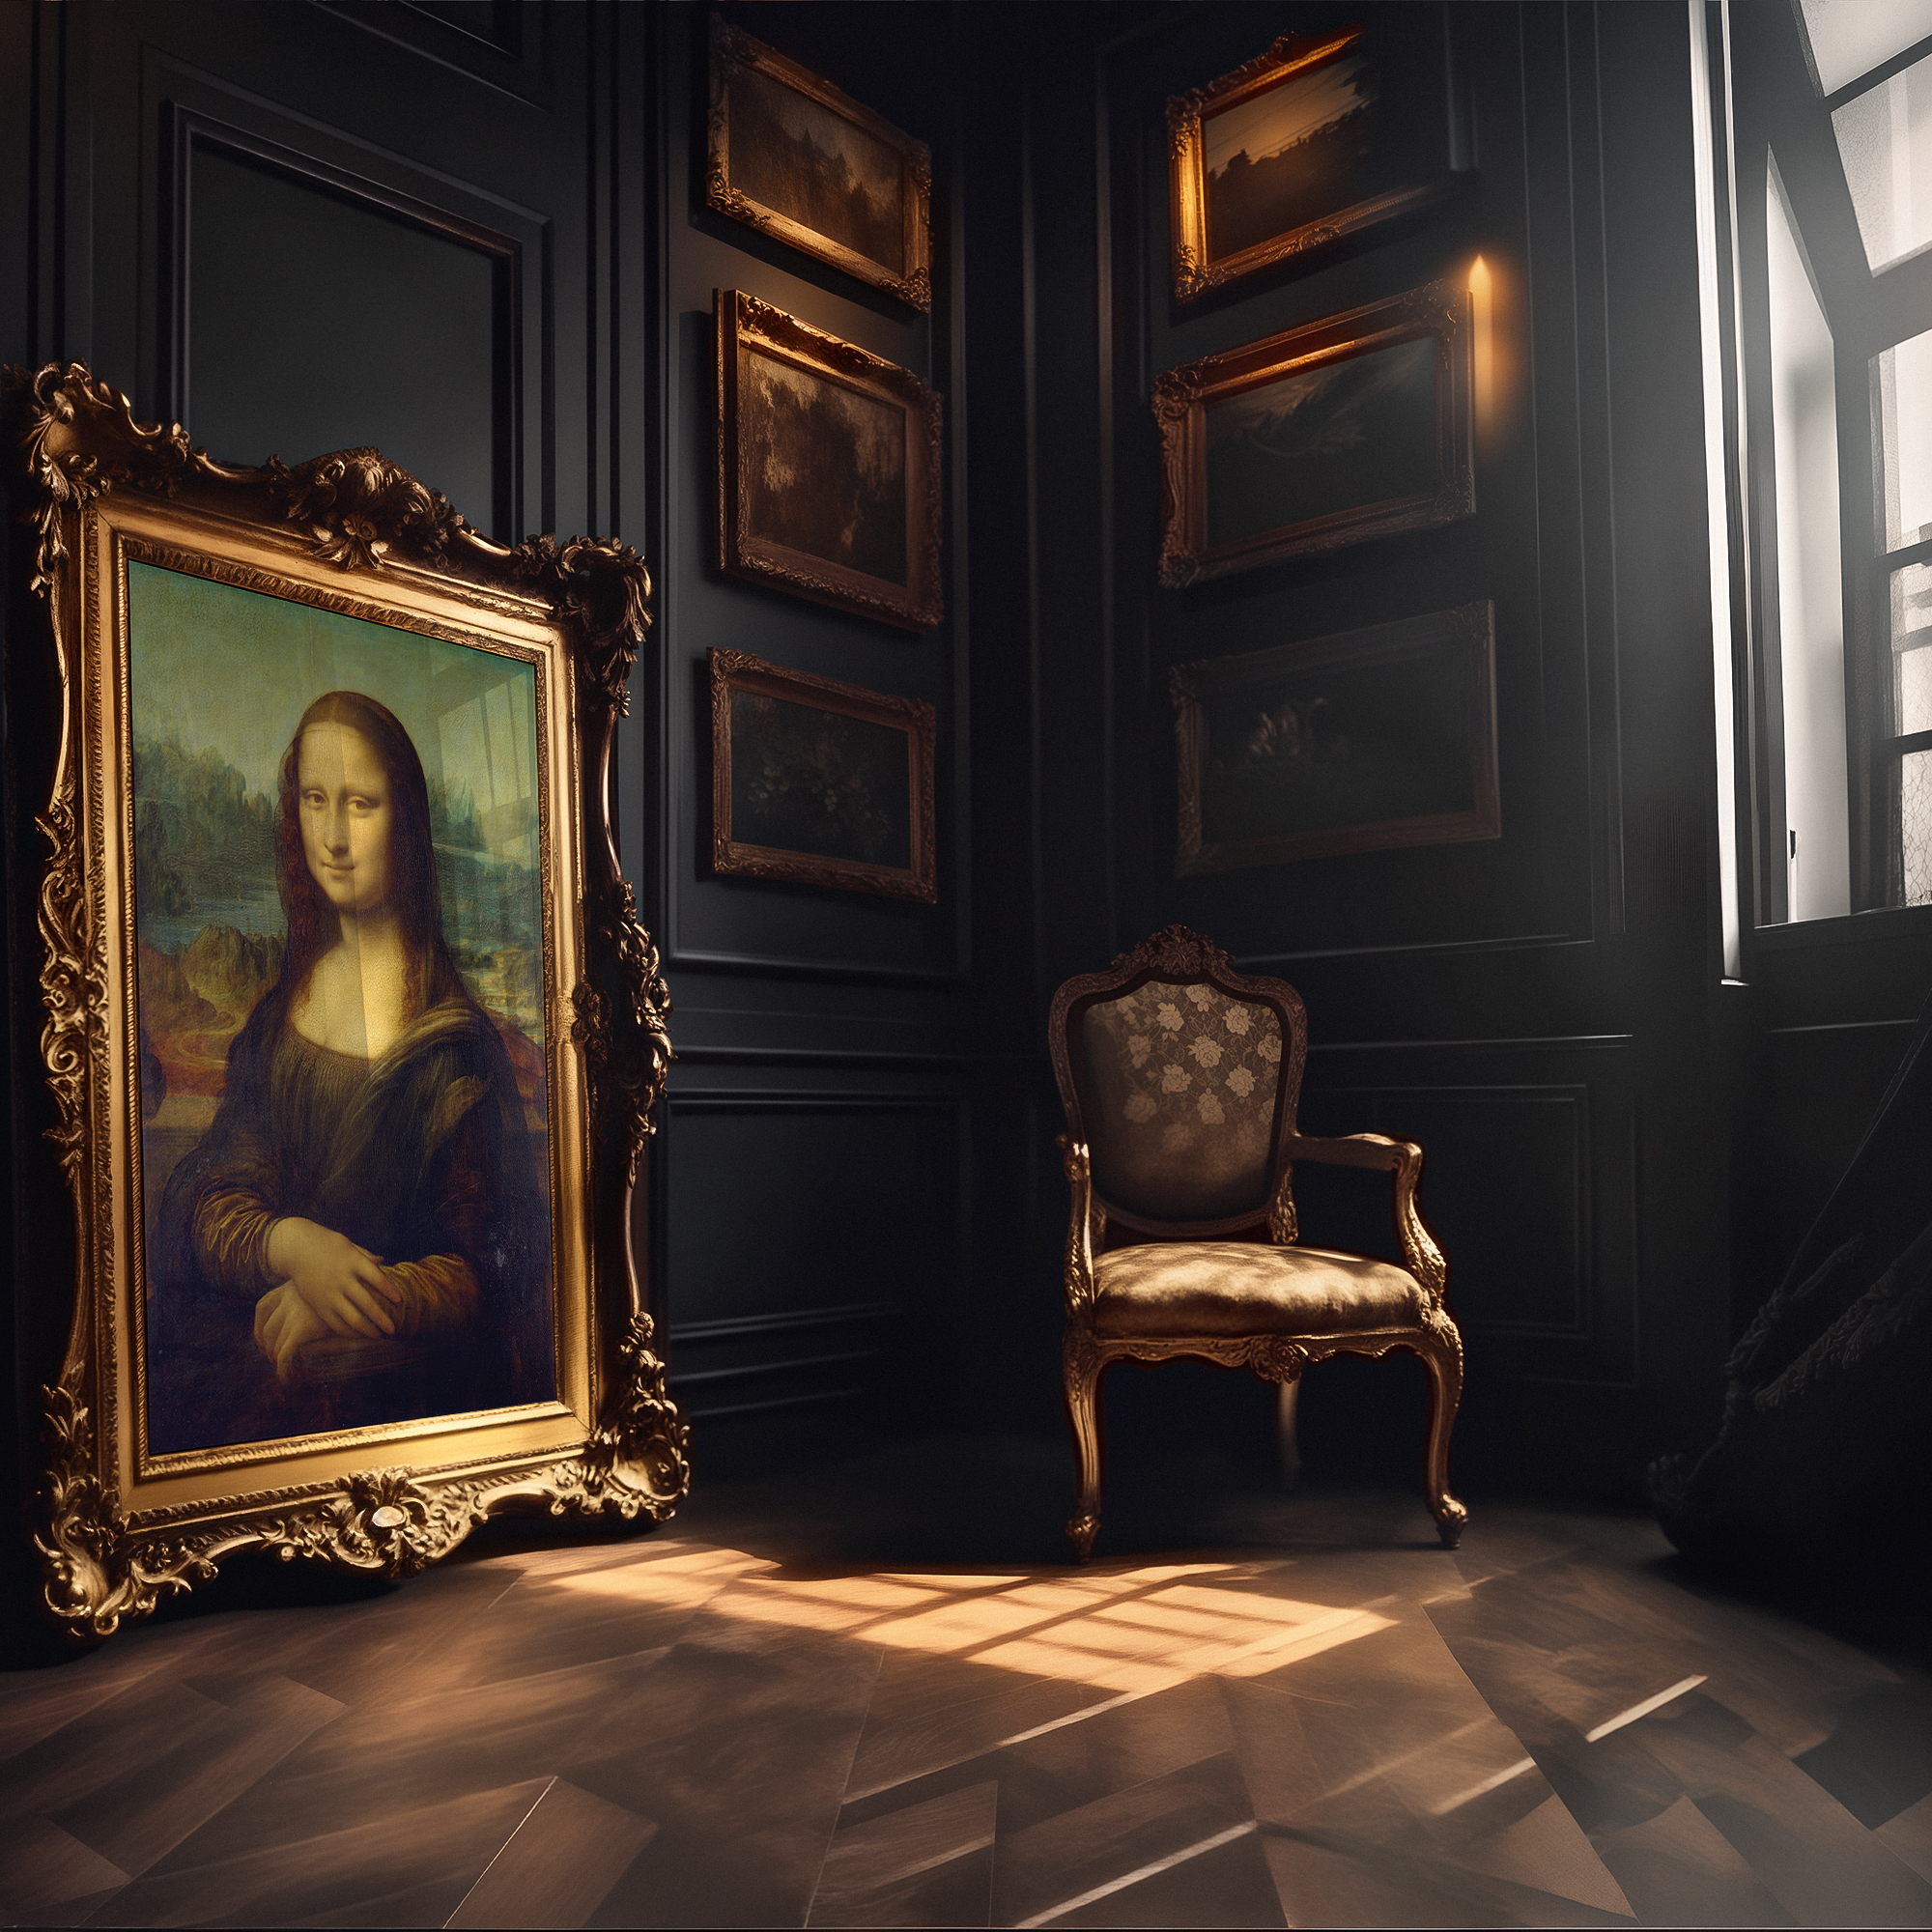 Mona Lisa by Leonardo da Vinci Metal Print, Dark Academia, Gothic Art, Classic Art